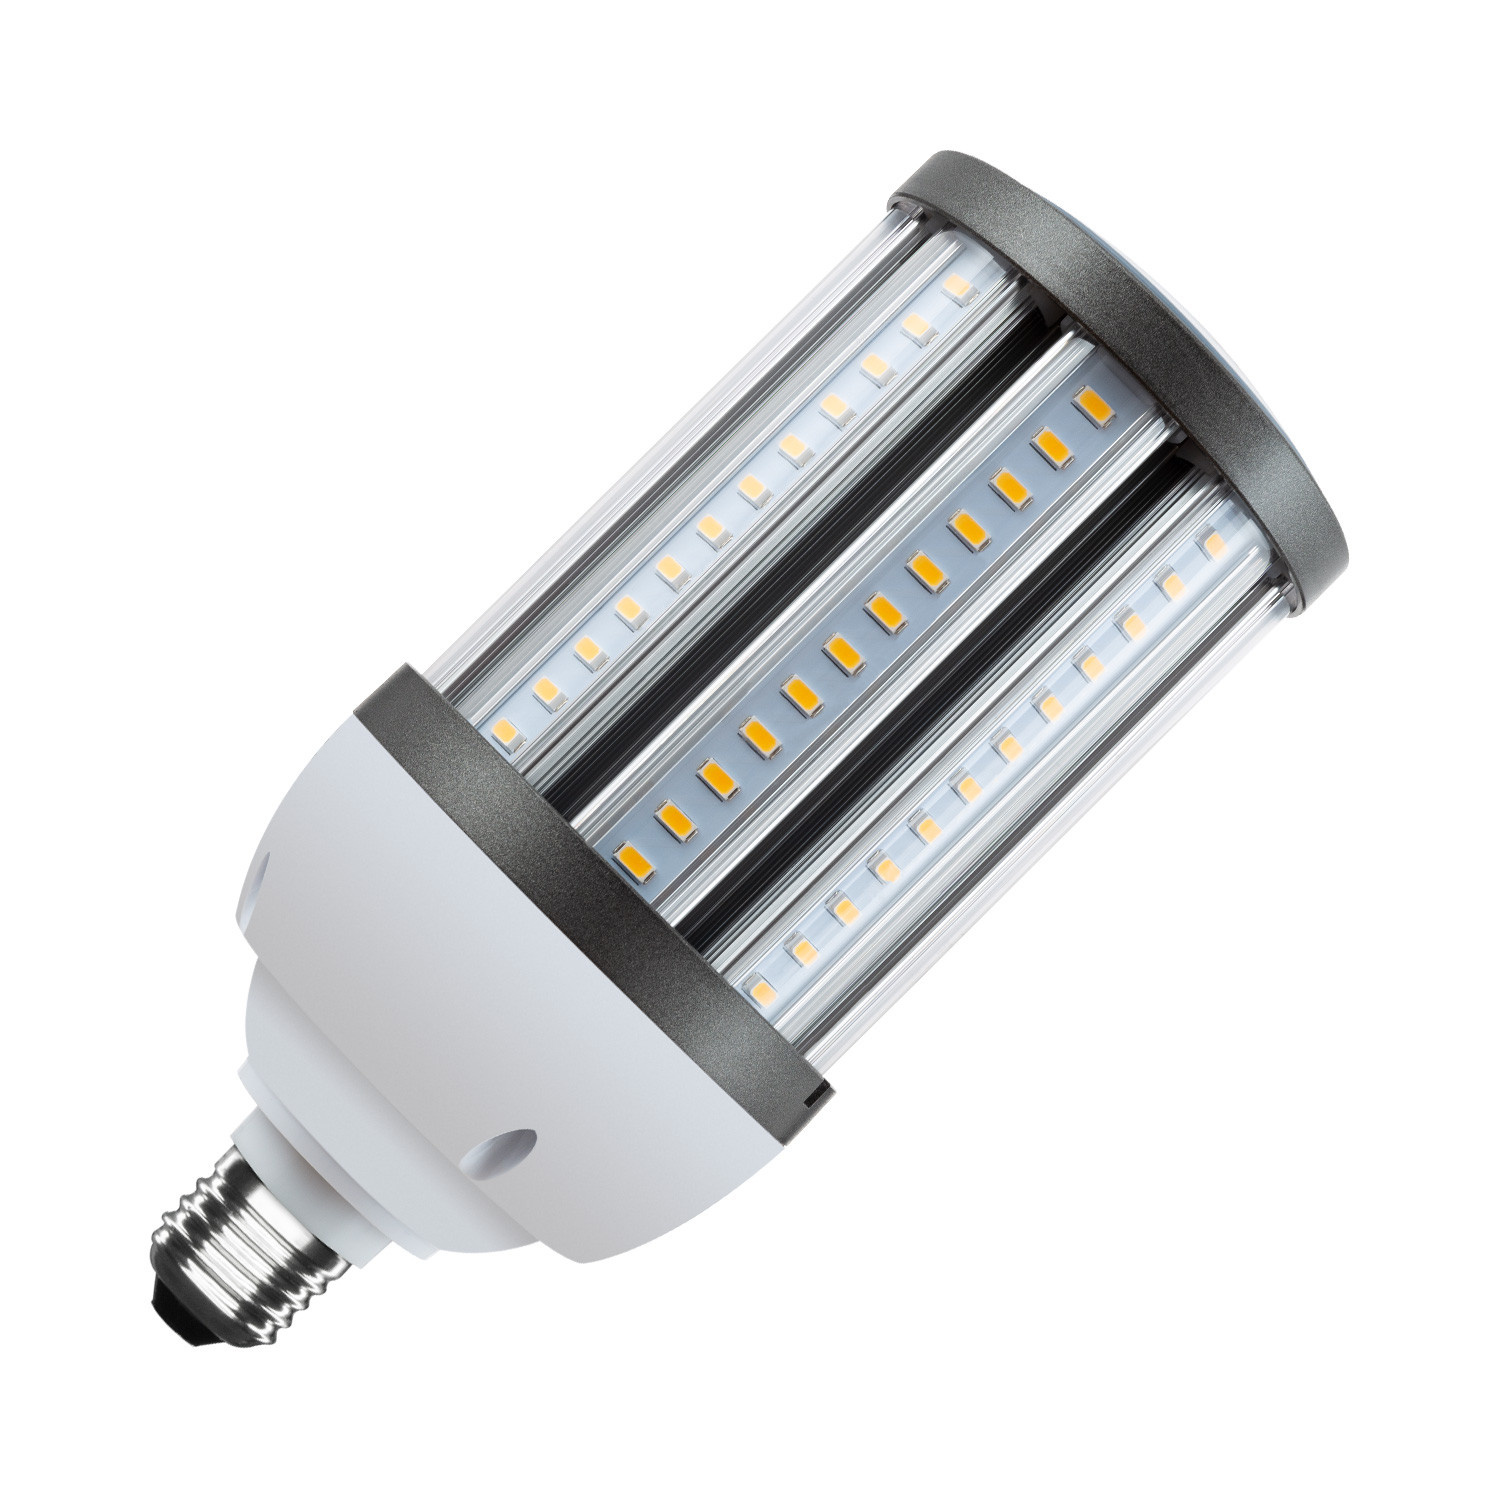 Ontspannend Minachting Slechte factor E27 Corn Lamp 35w - E27 Straatlamp - 3600 Lumen - IP44 -  Ledlampaanbiedingen.nl